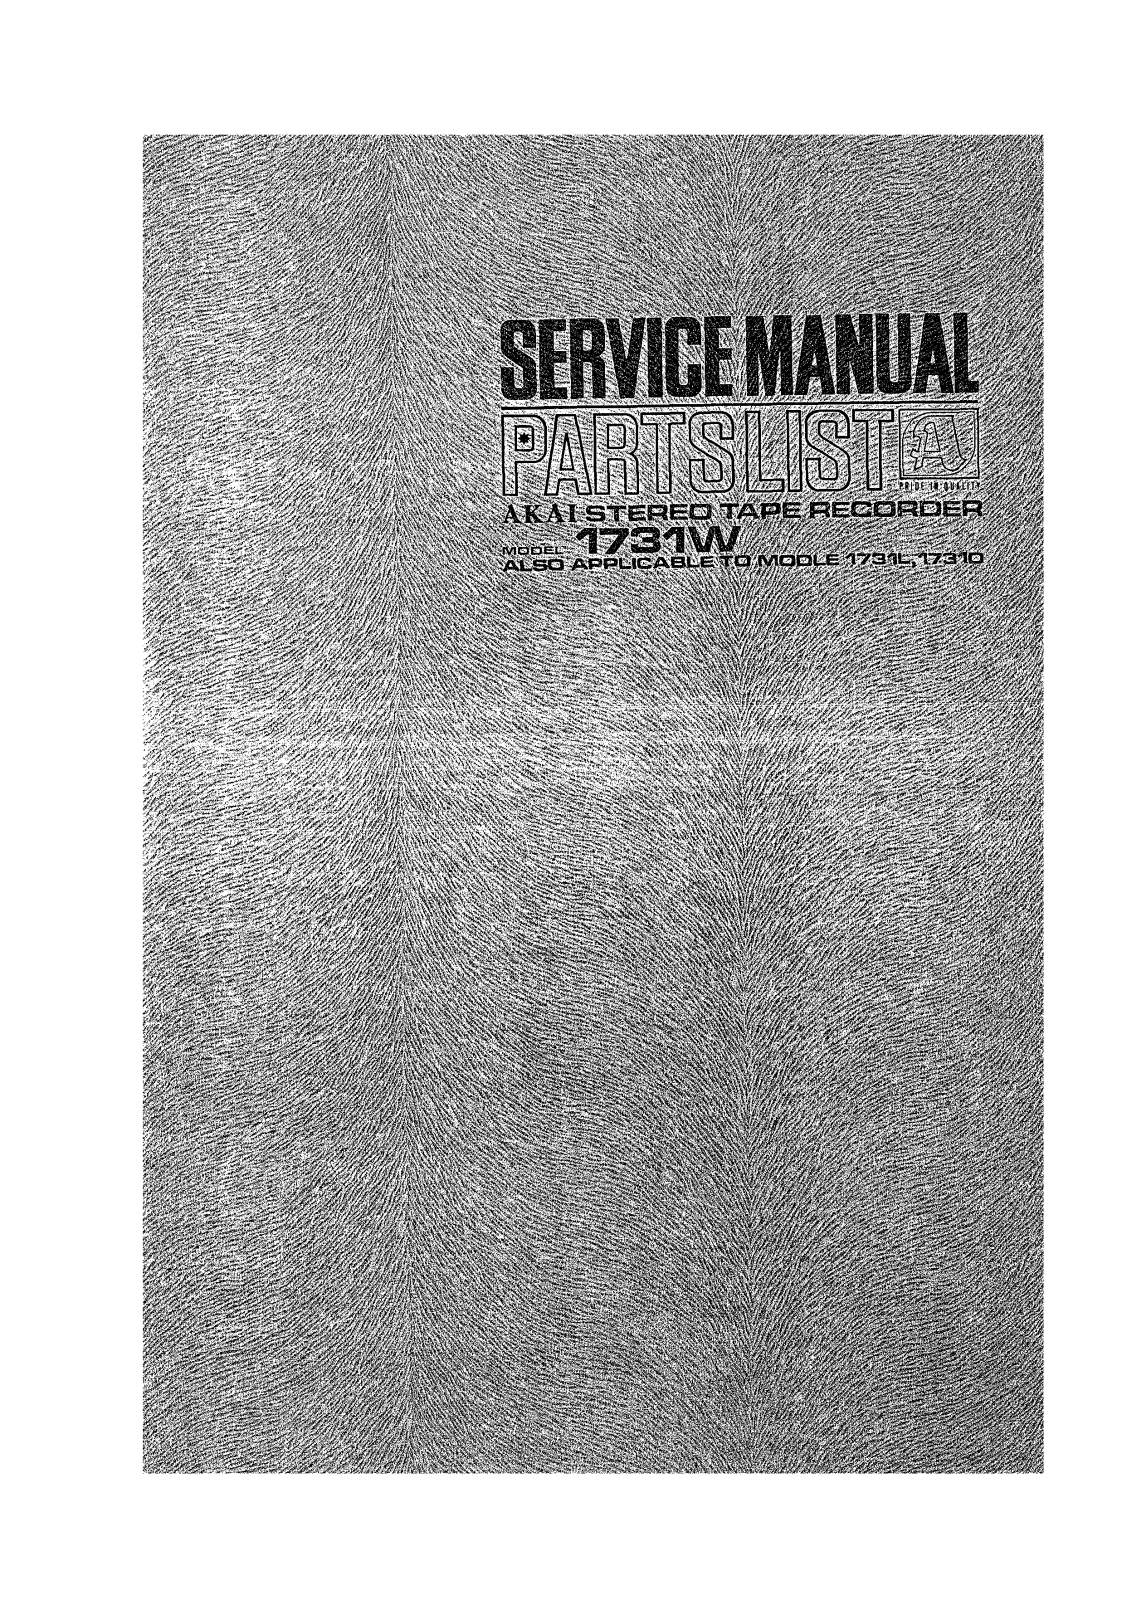 Akai 1731-W Service Manual